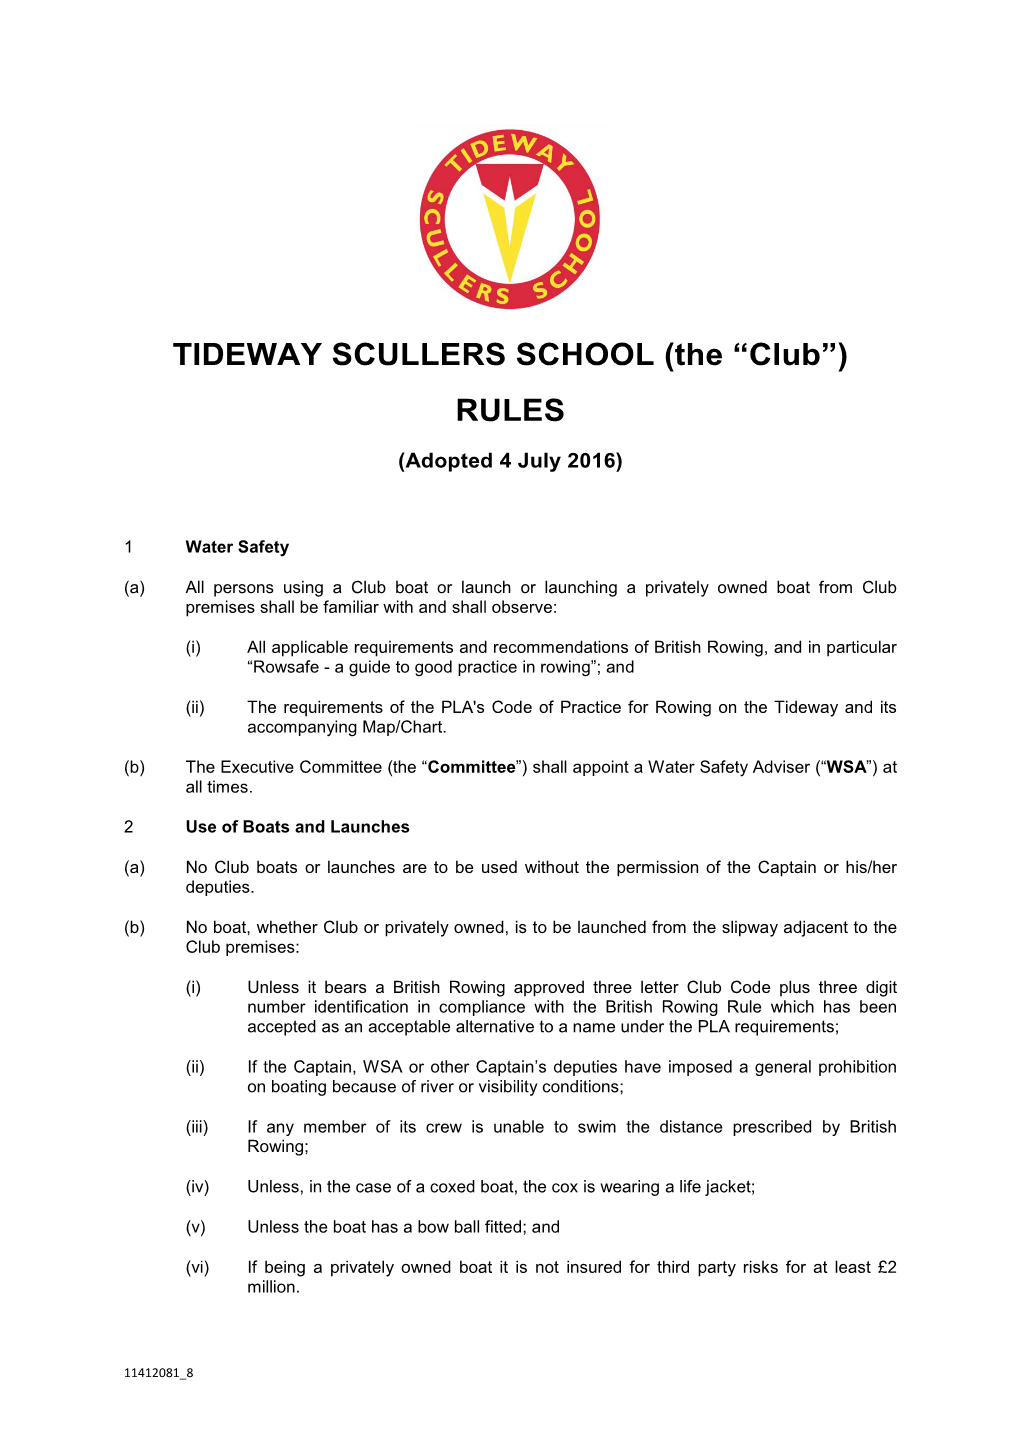 TIDEWAY SCULLERS SCHOOL (The “Club”) RULES